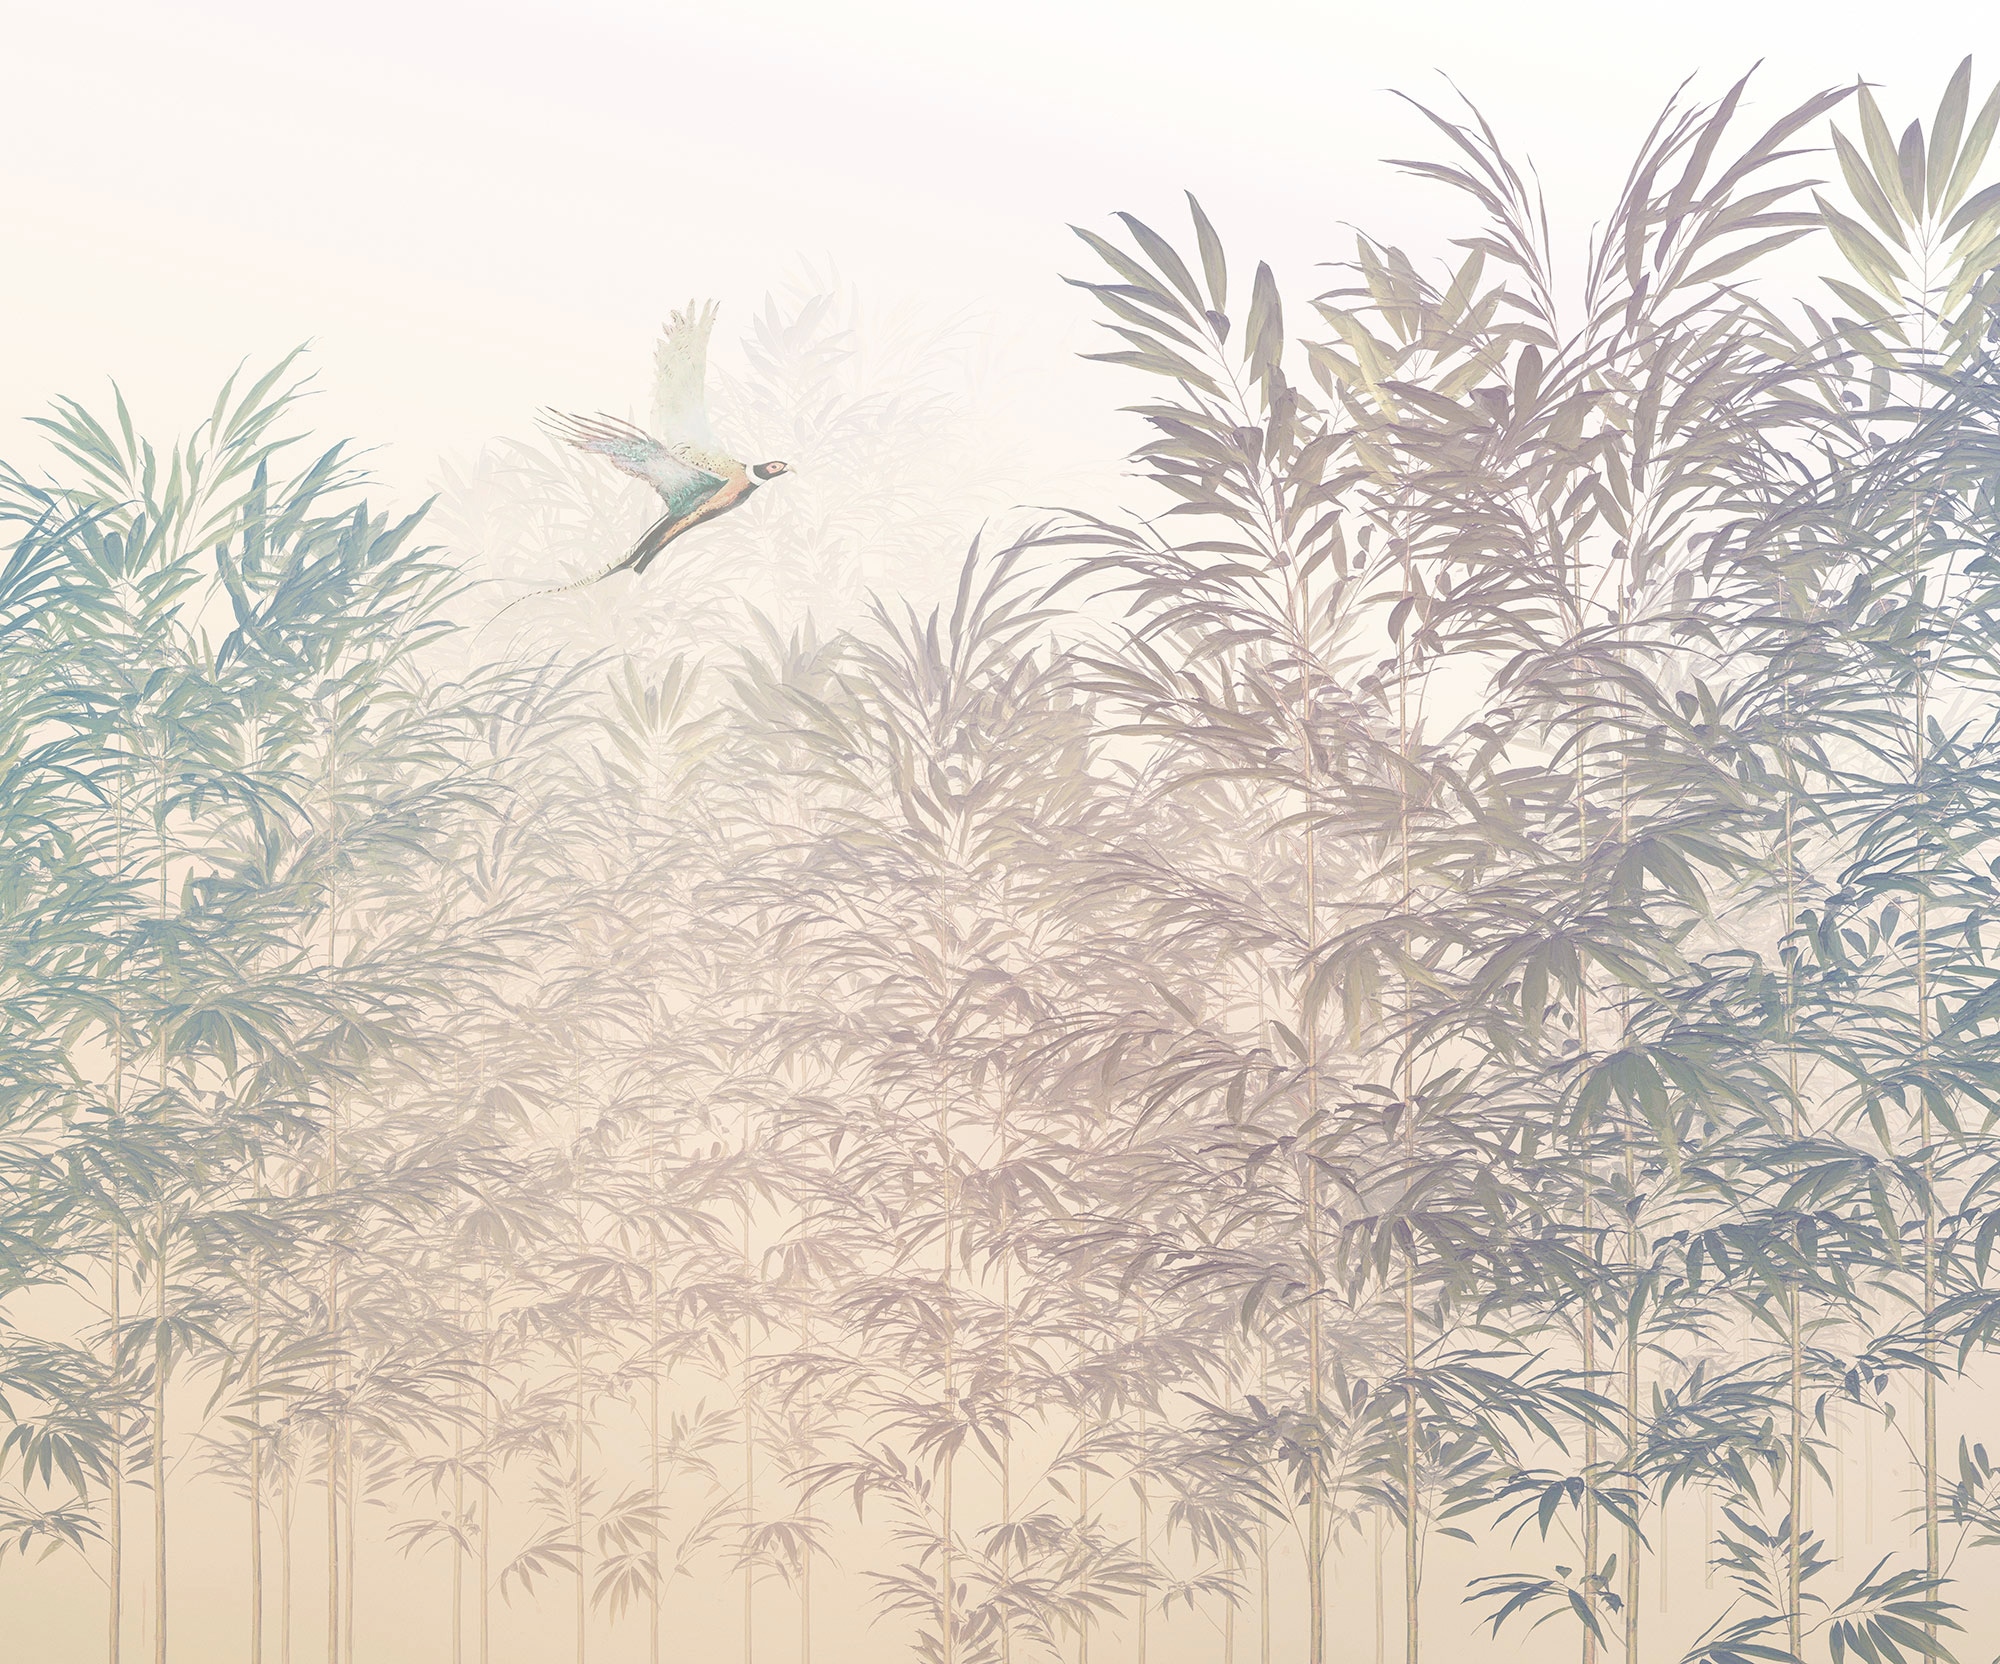 Komar Vliestapete »Bamboo Paradise«, 300x250 cm (Breite x Höhe)